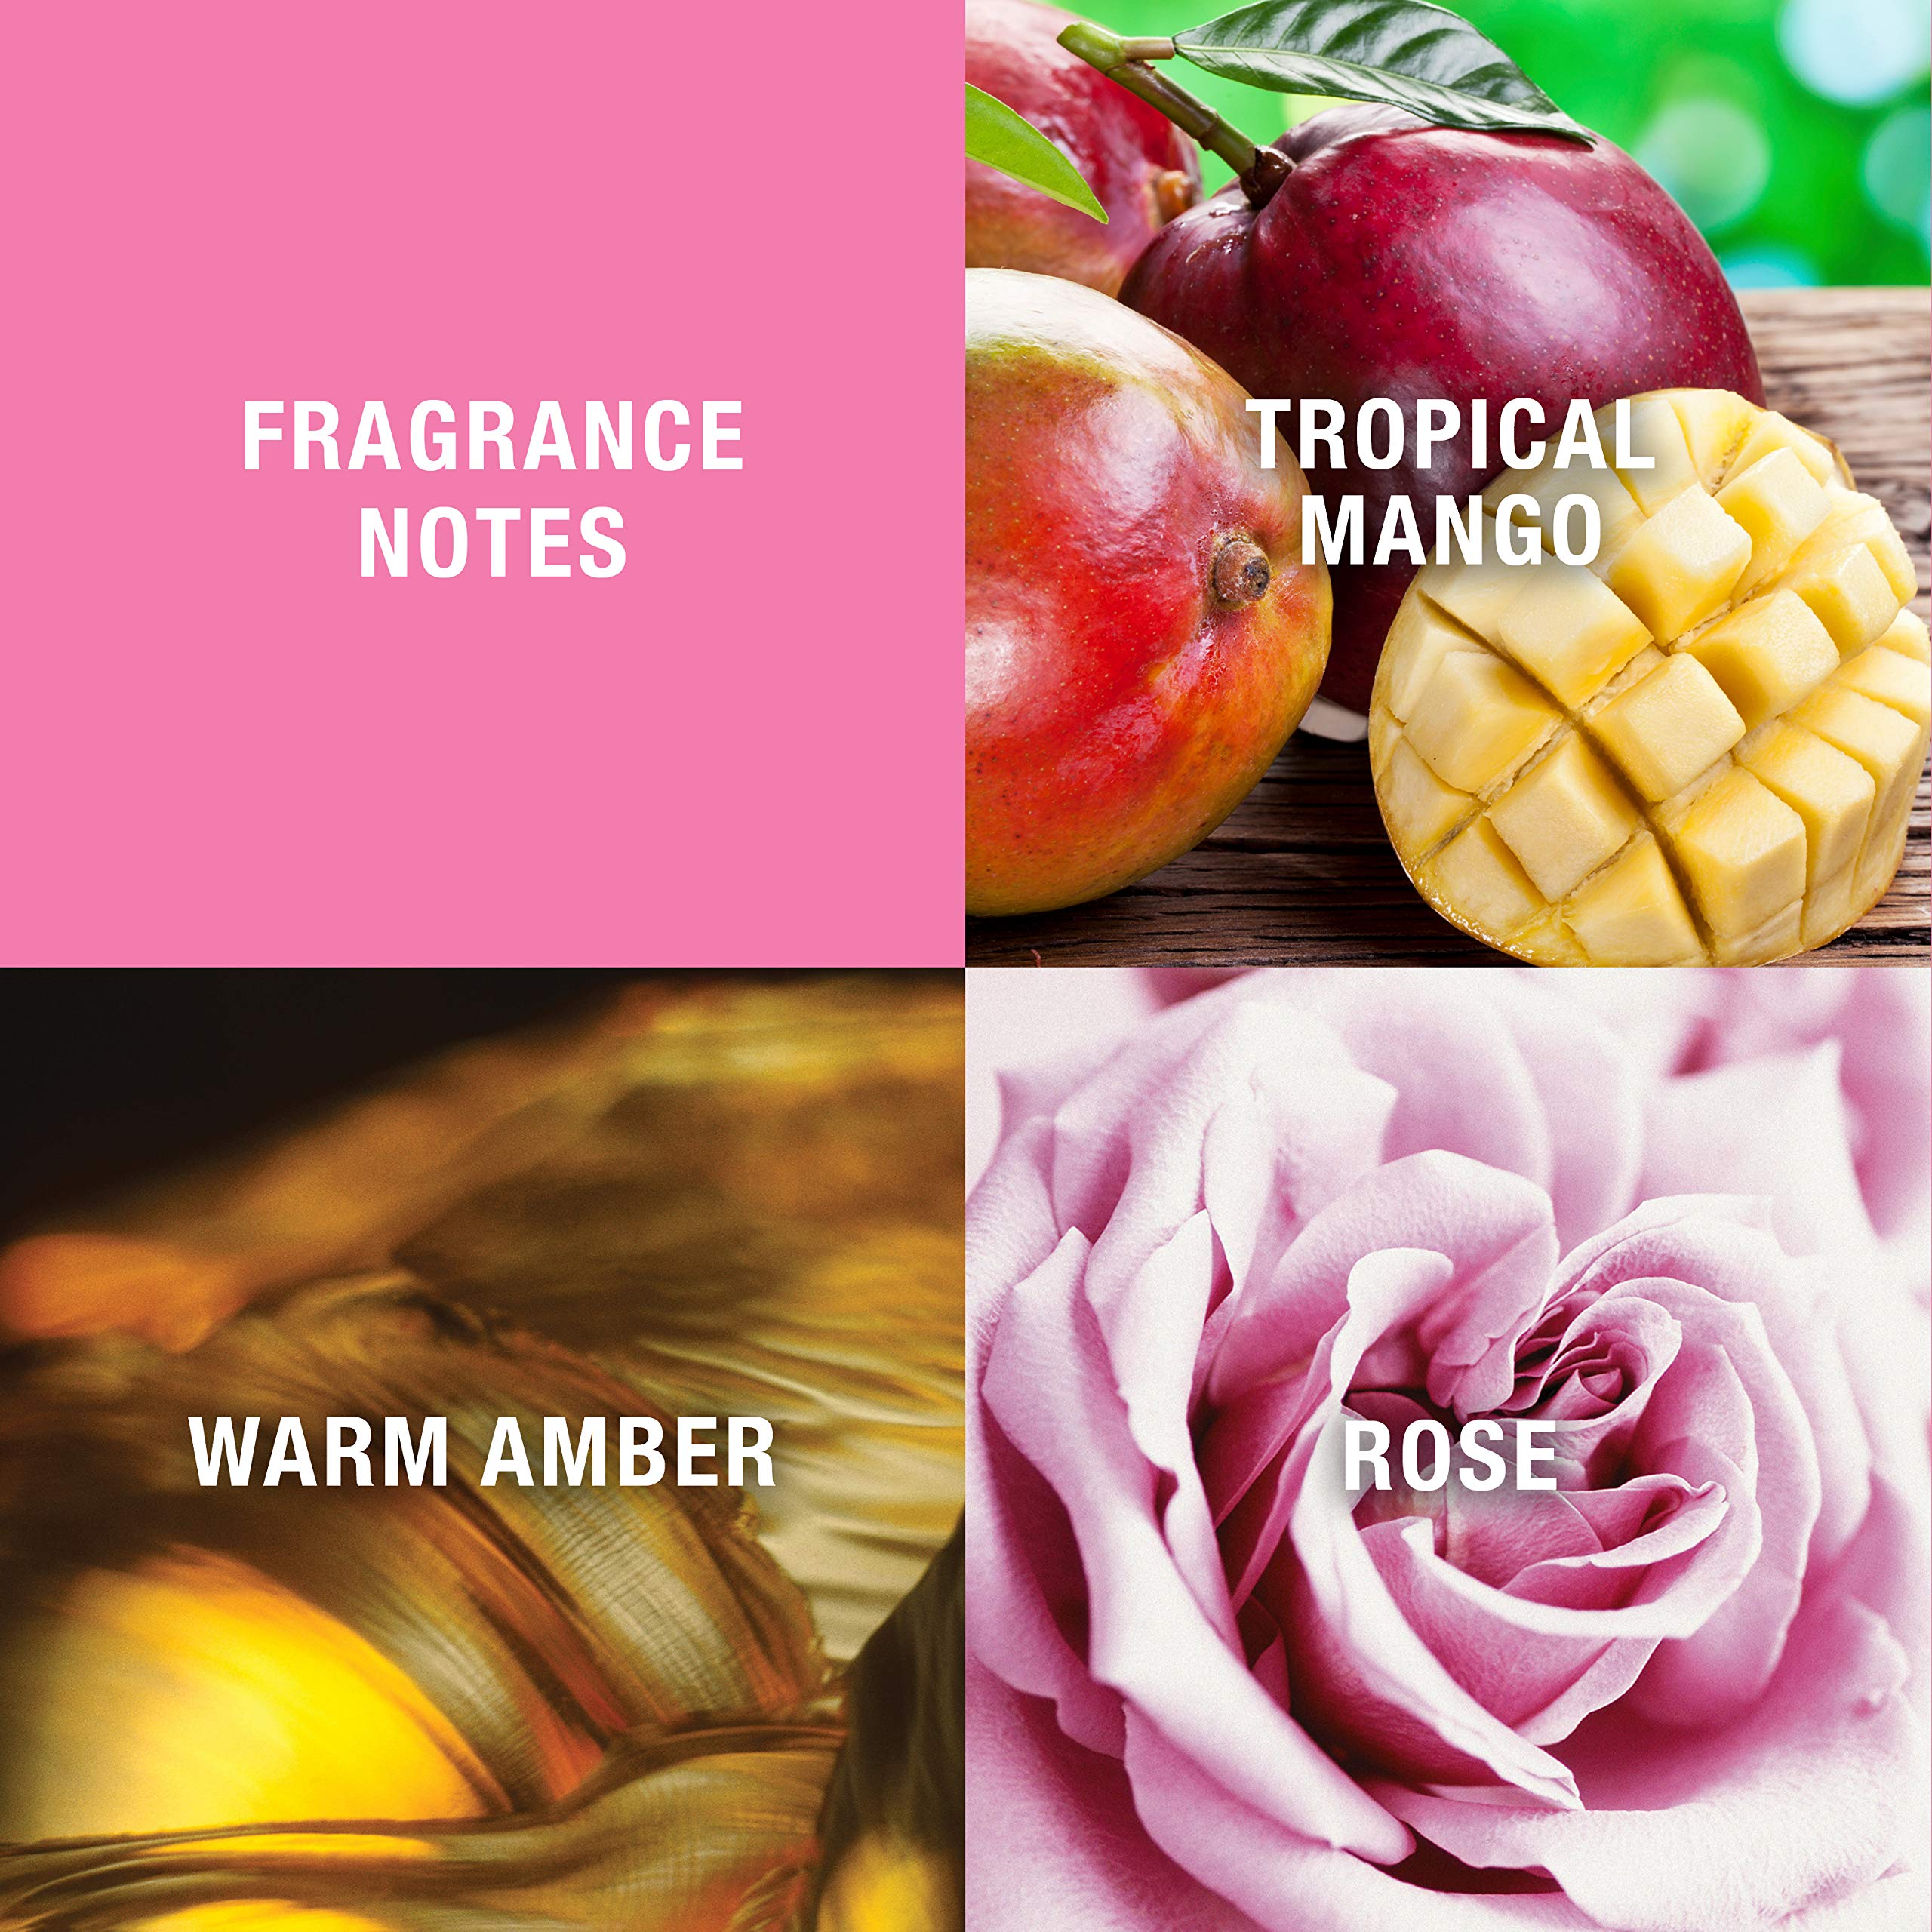 Ed Hardy Women's Perfume Fragrance by Christian Audigier, Eau De Parfum, 3.4 Fl Oz